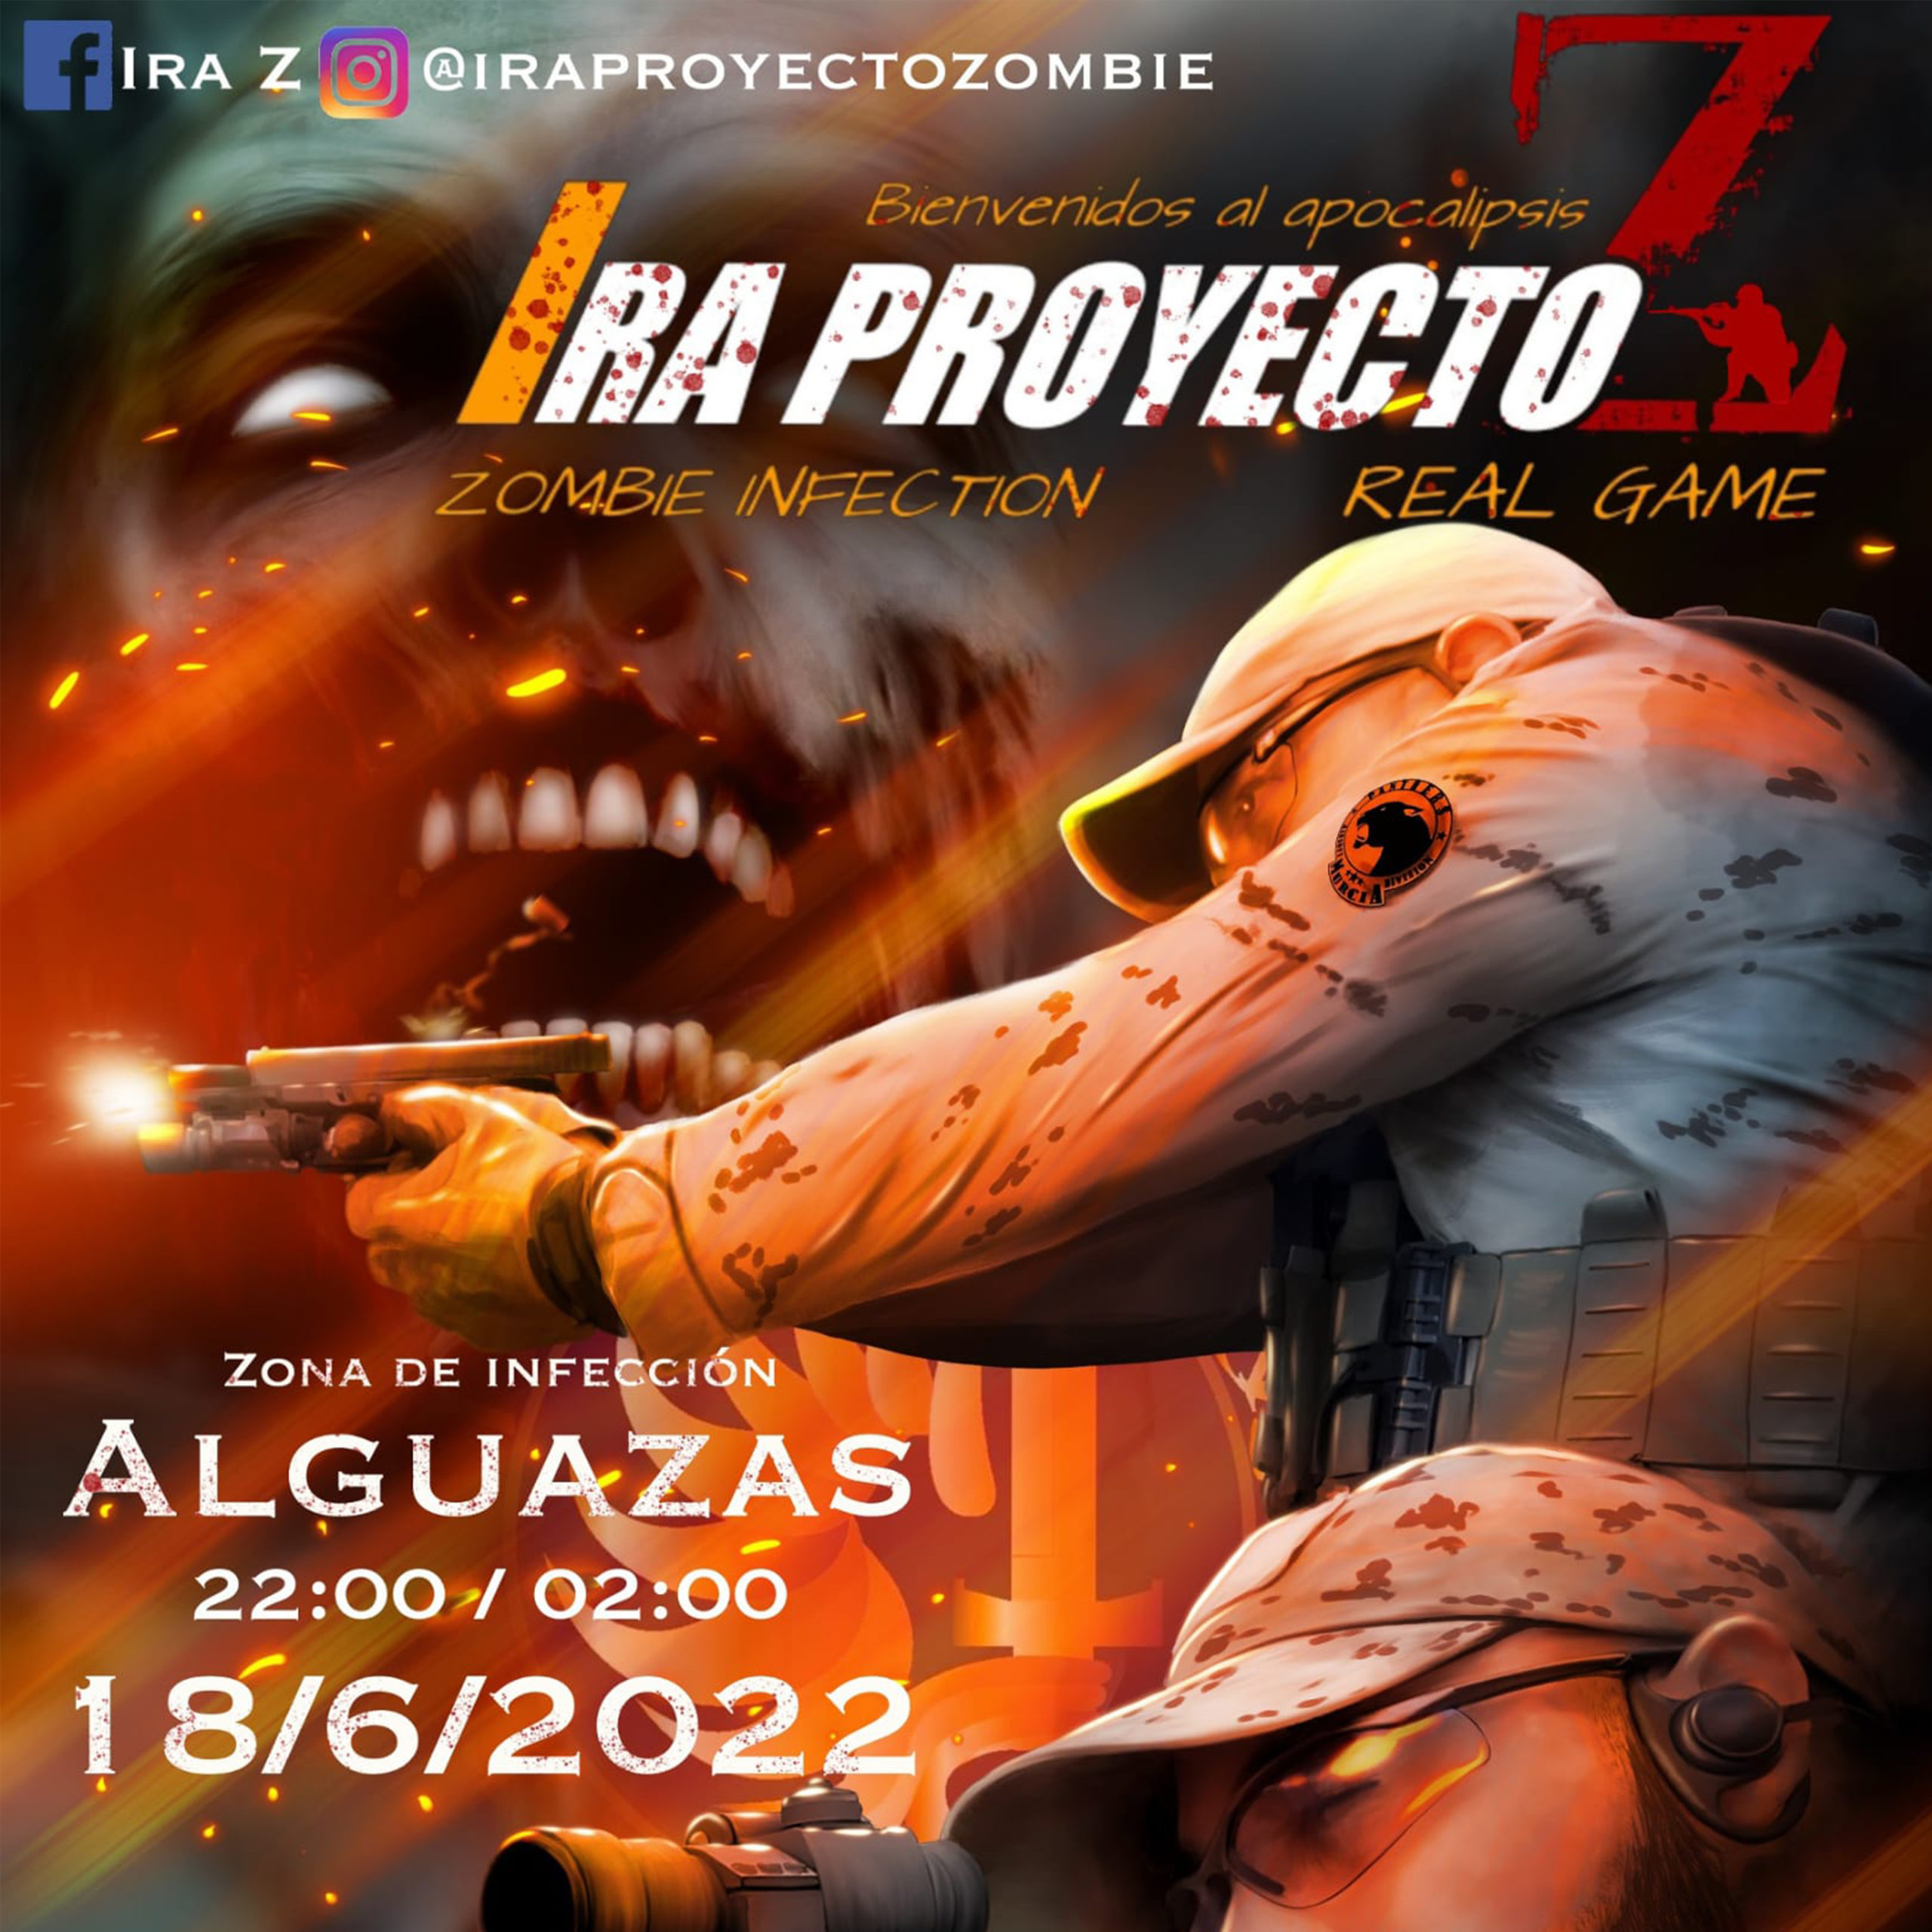 Real game: "Zombie Infection en Alguazas"